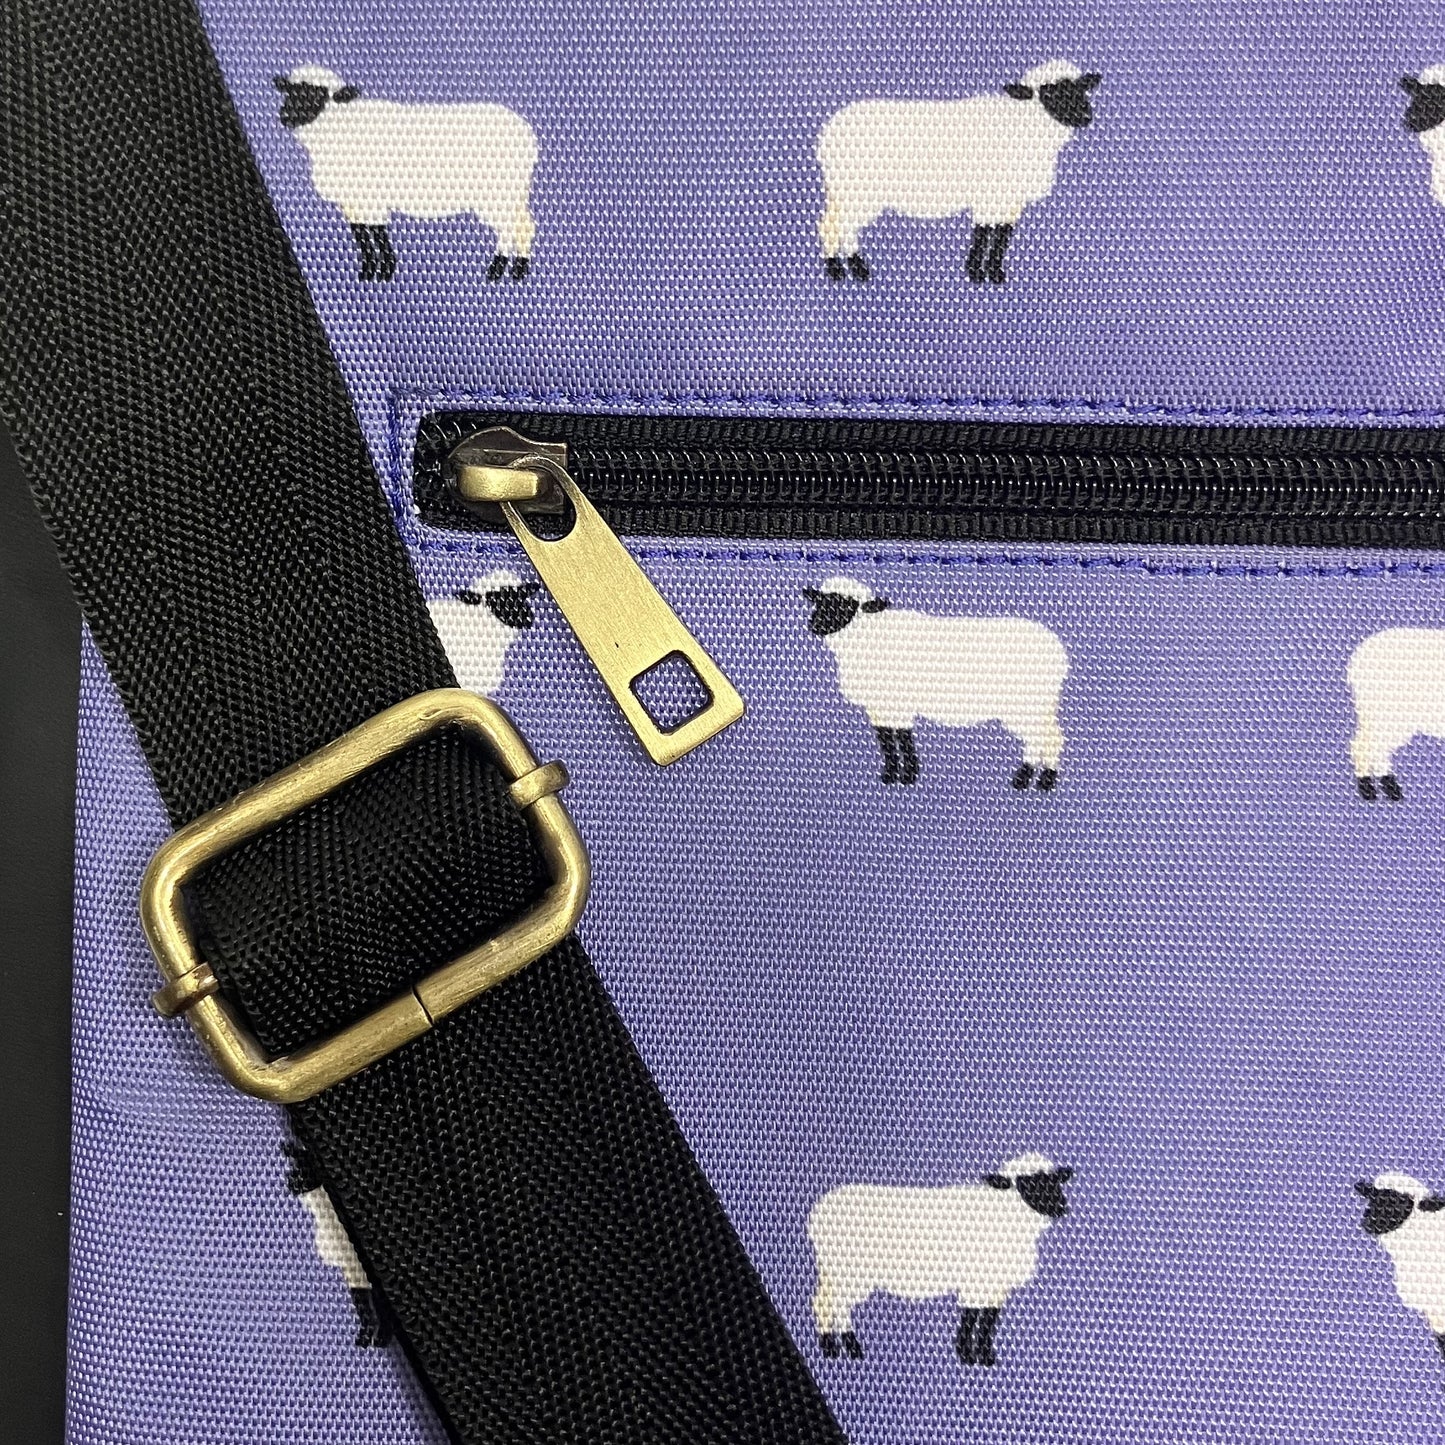 Sheep Cross Body Bag Lilac